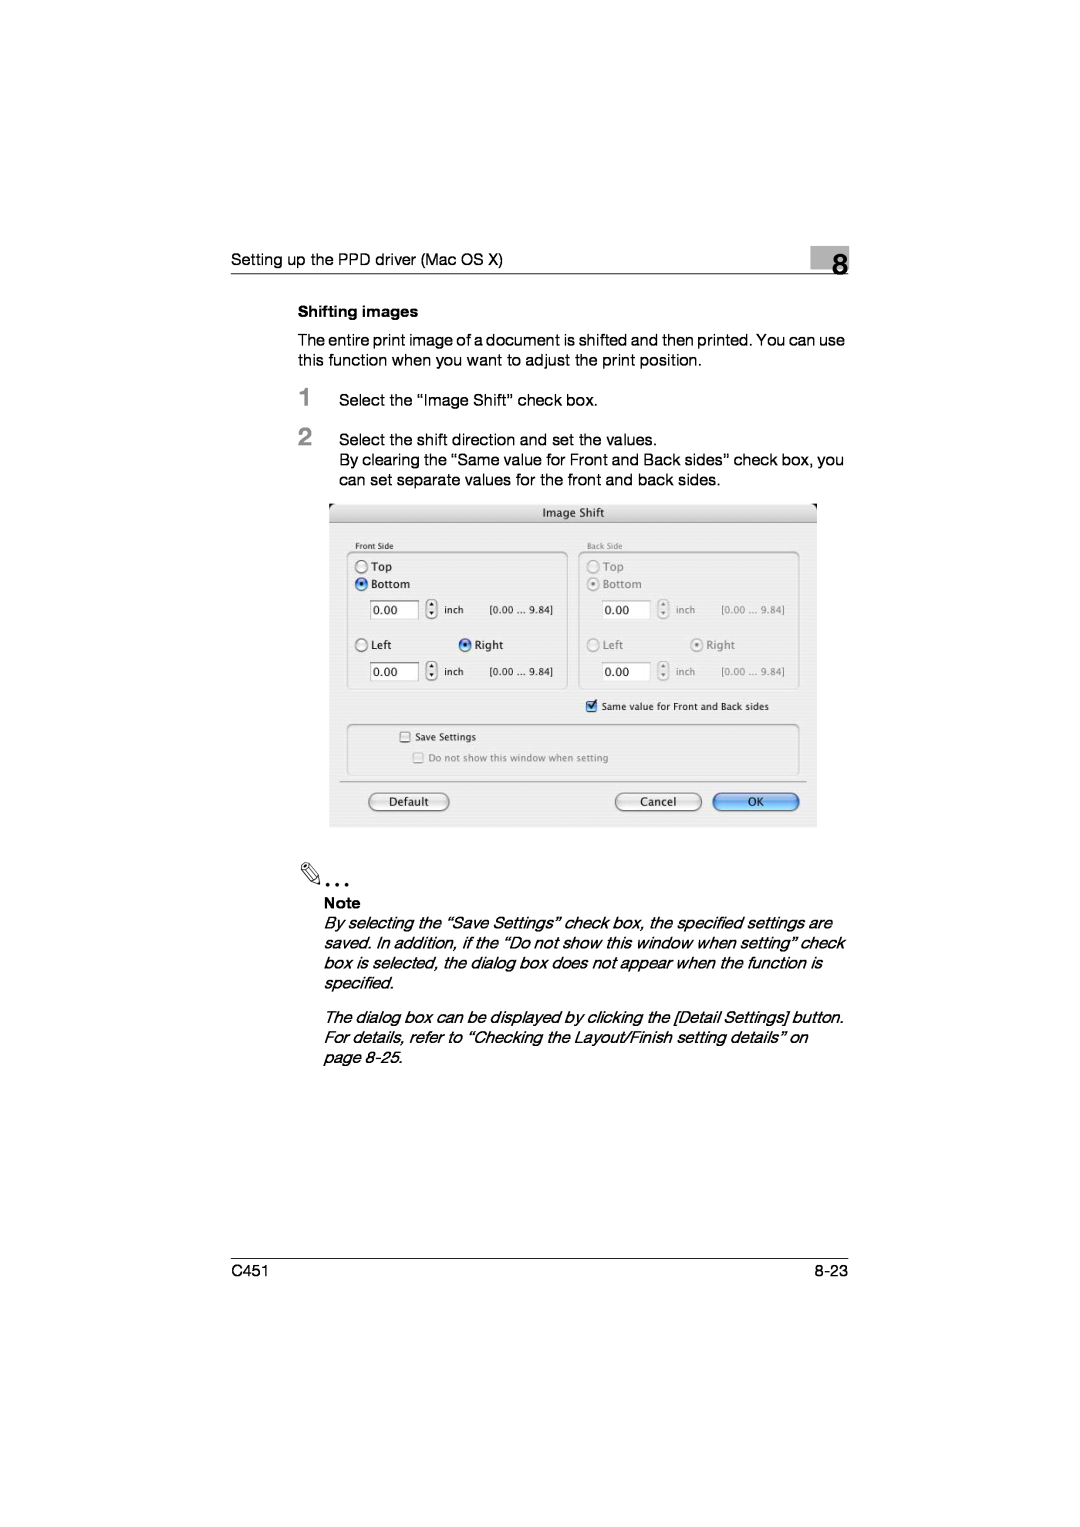 Konica Minolta C451 manual Setting up the PPD driver Mac OS 